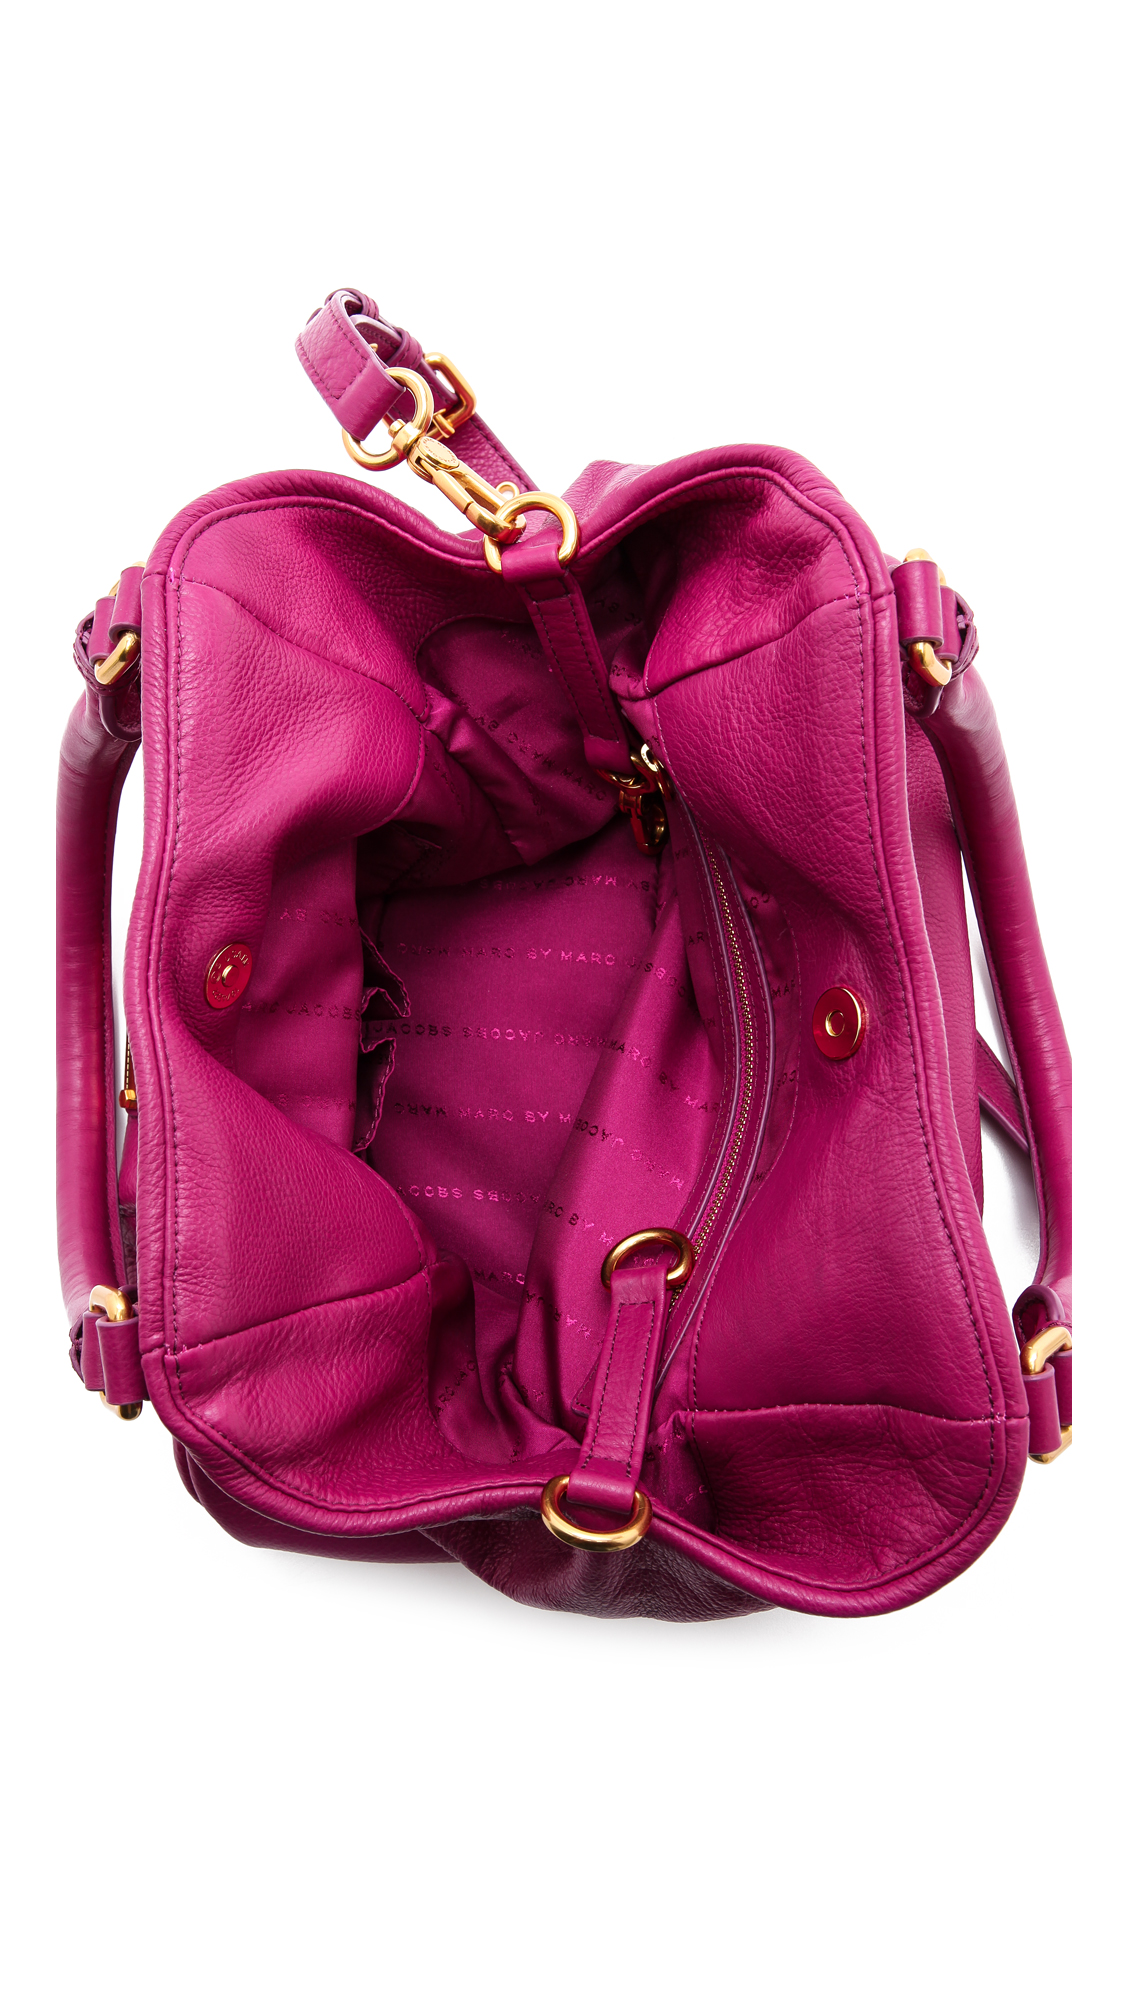 Marc By Marc Jacobs Classic Q Fran Bag in Hot Fuchsia (Purple) - Lyst